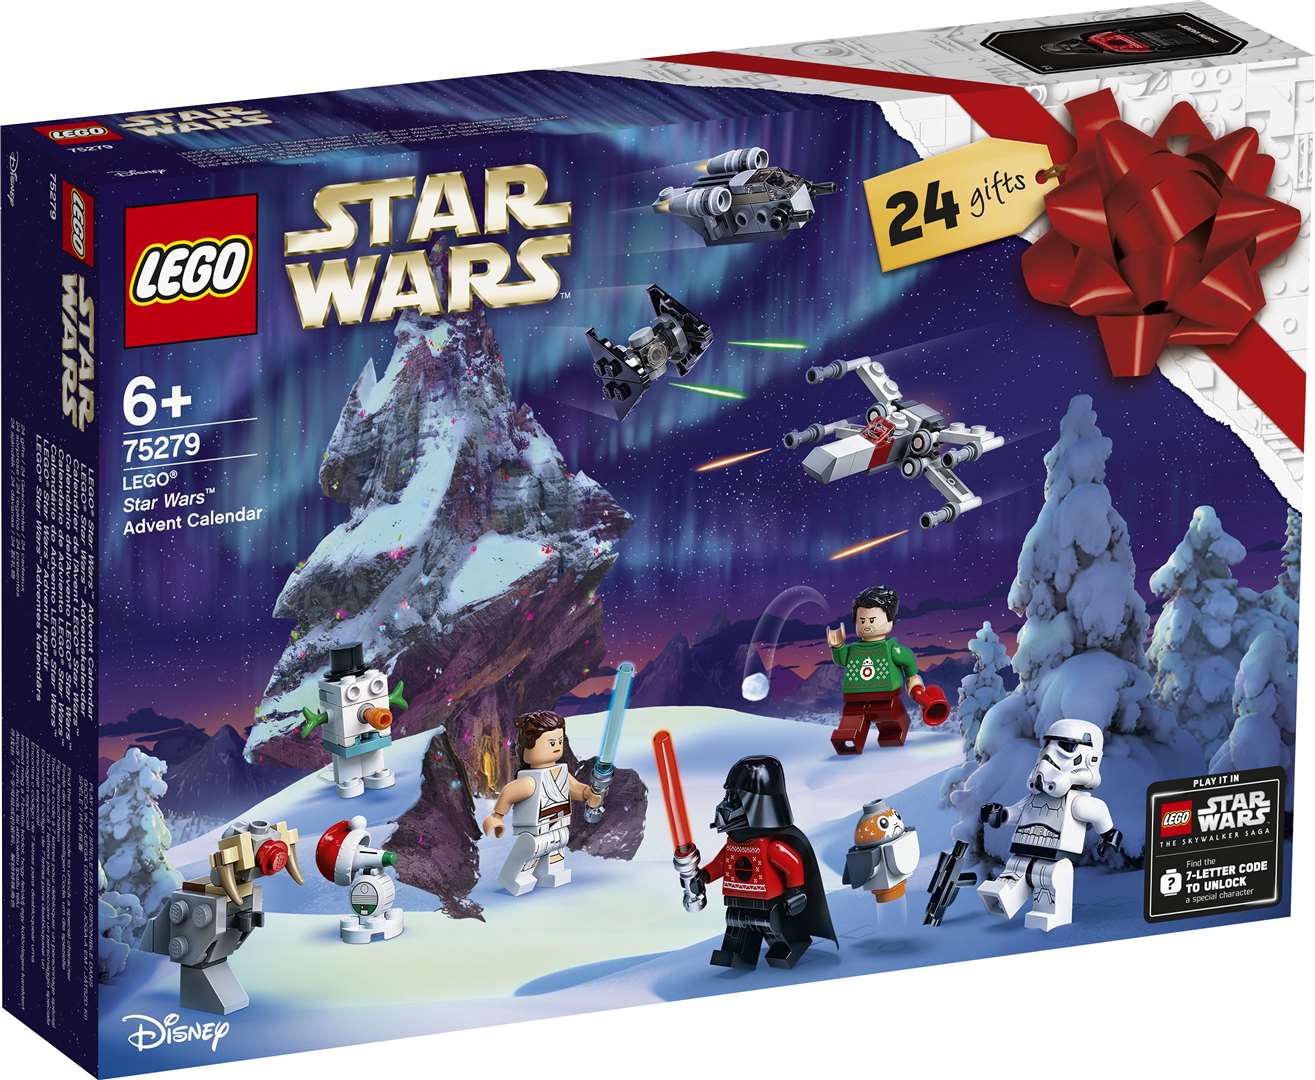 The Star Wars advent calendar is already proving popular